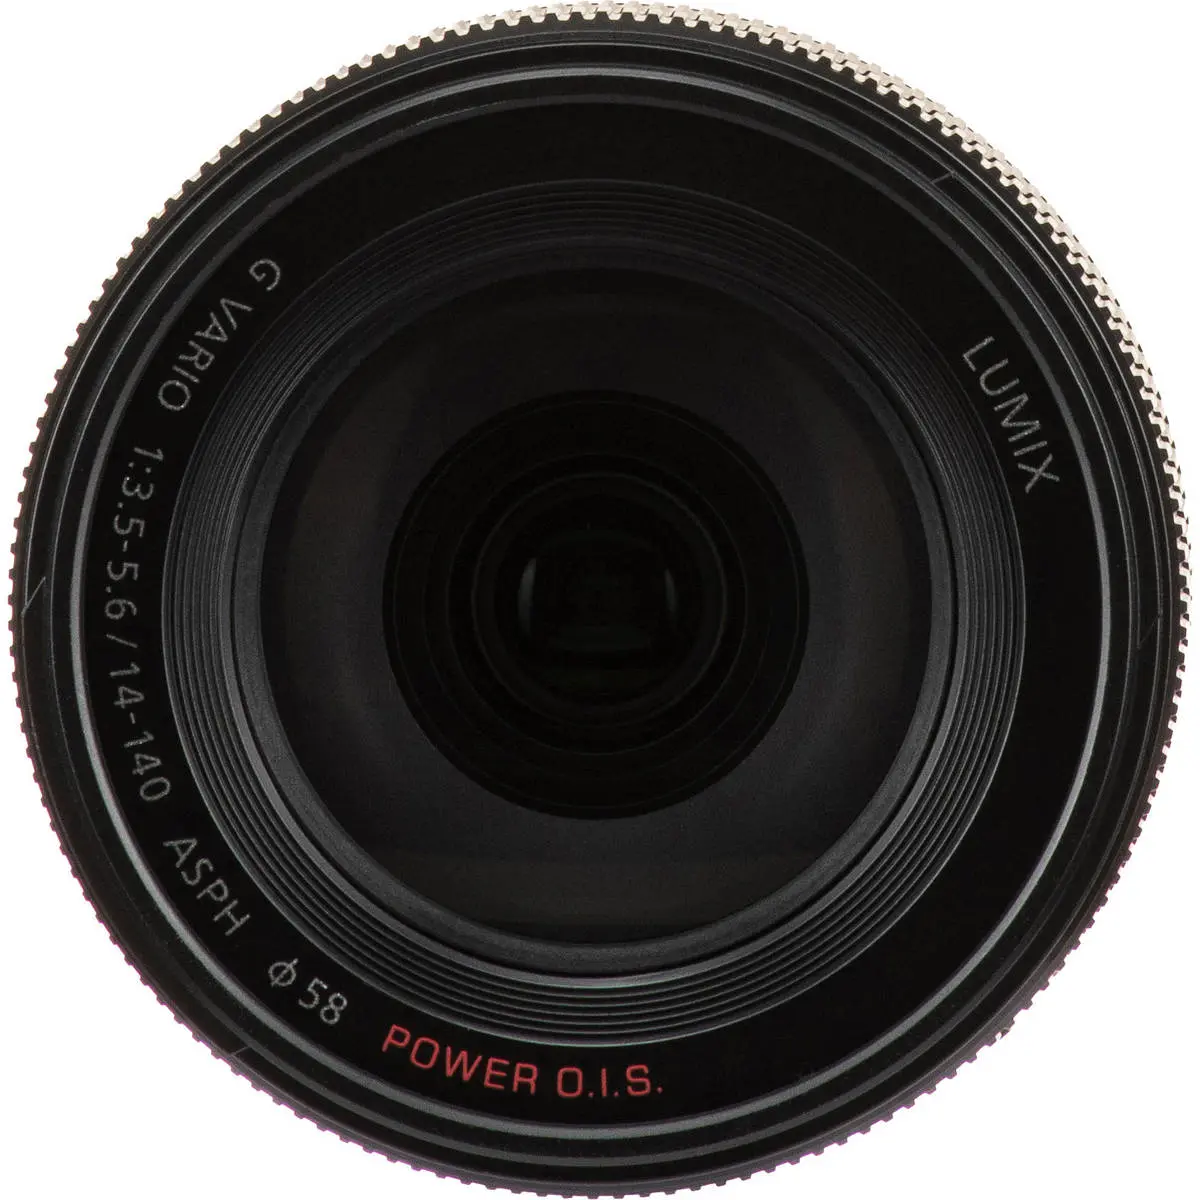 6. Panasonic G VARIO 14-140mm F3.5-5.6 MK II (Black) Lens